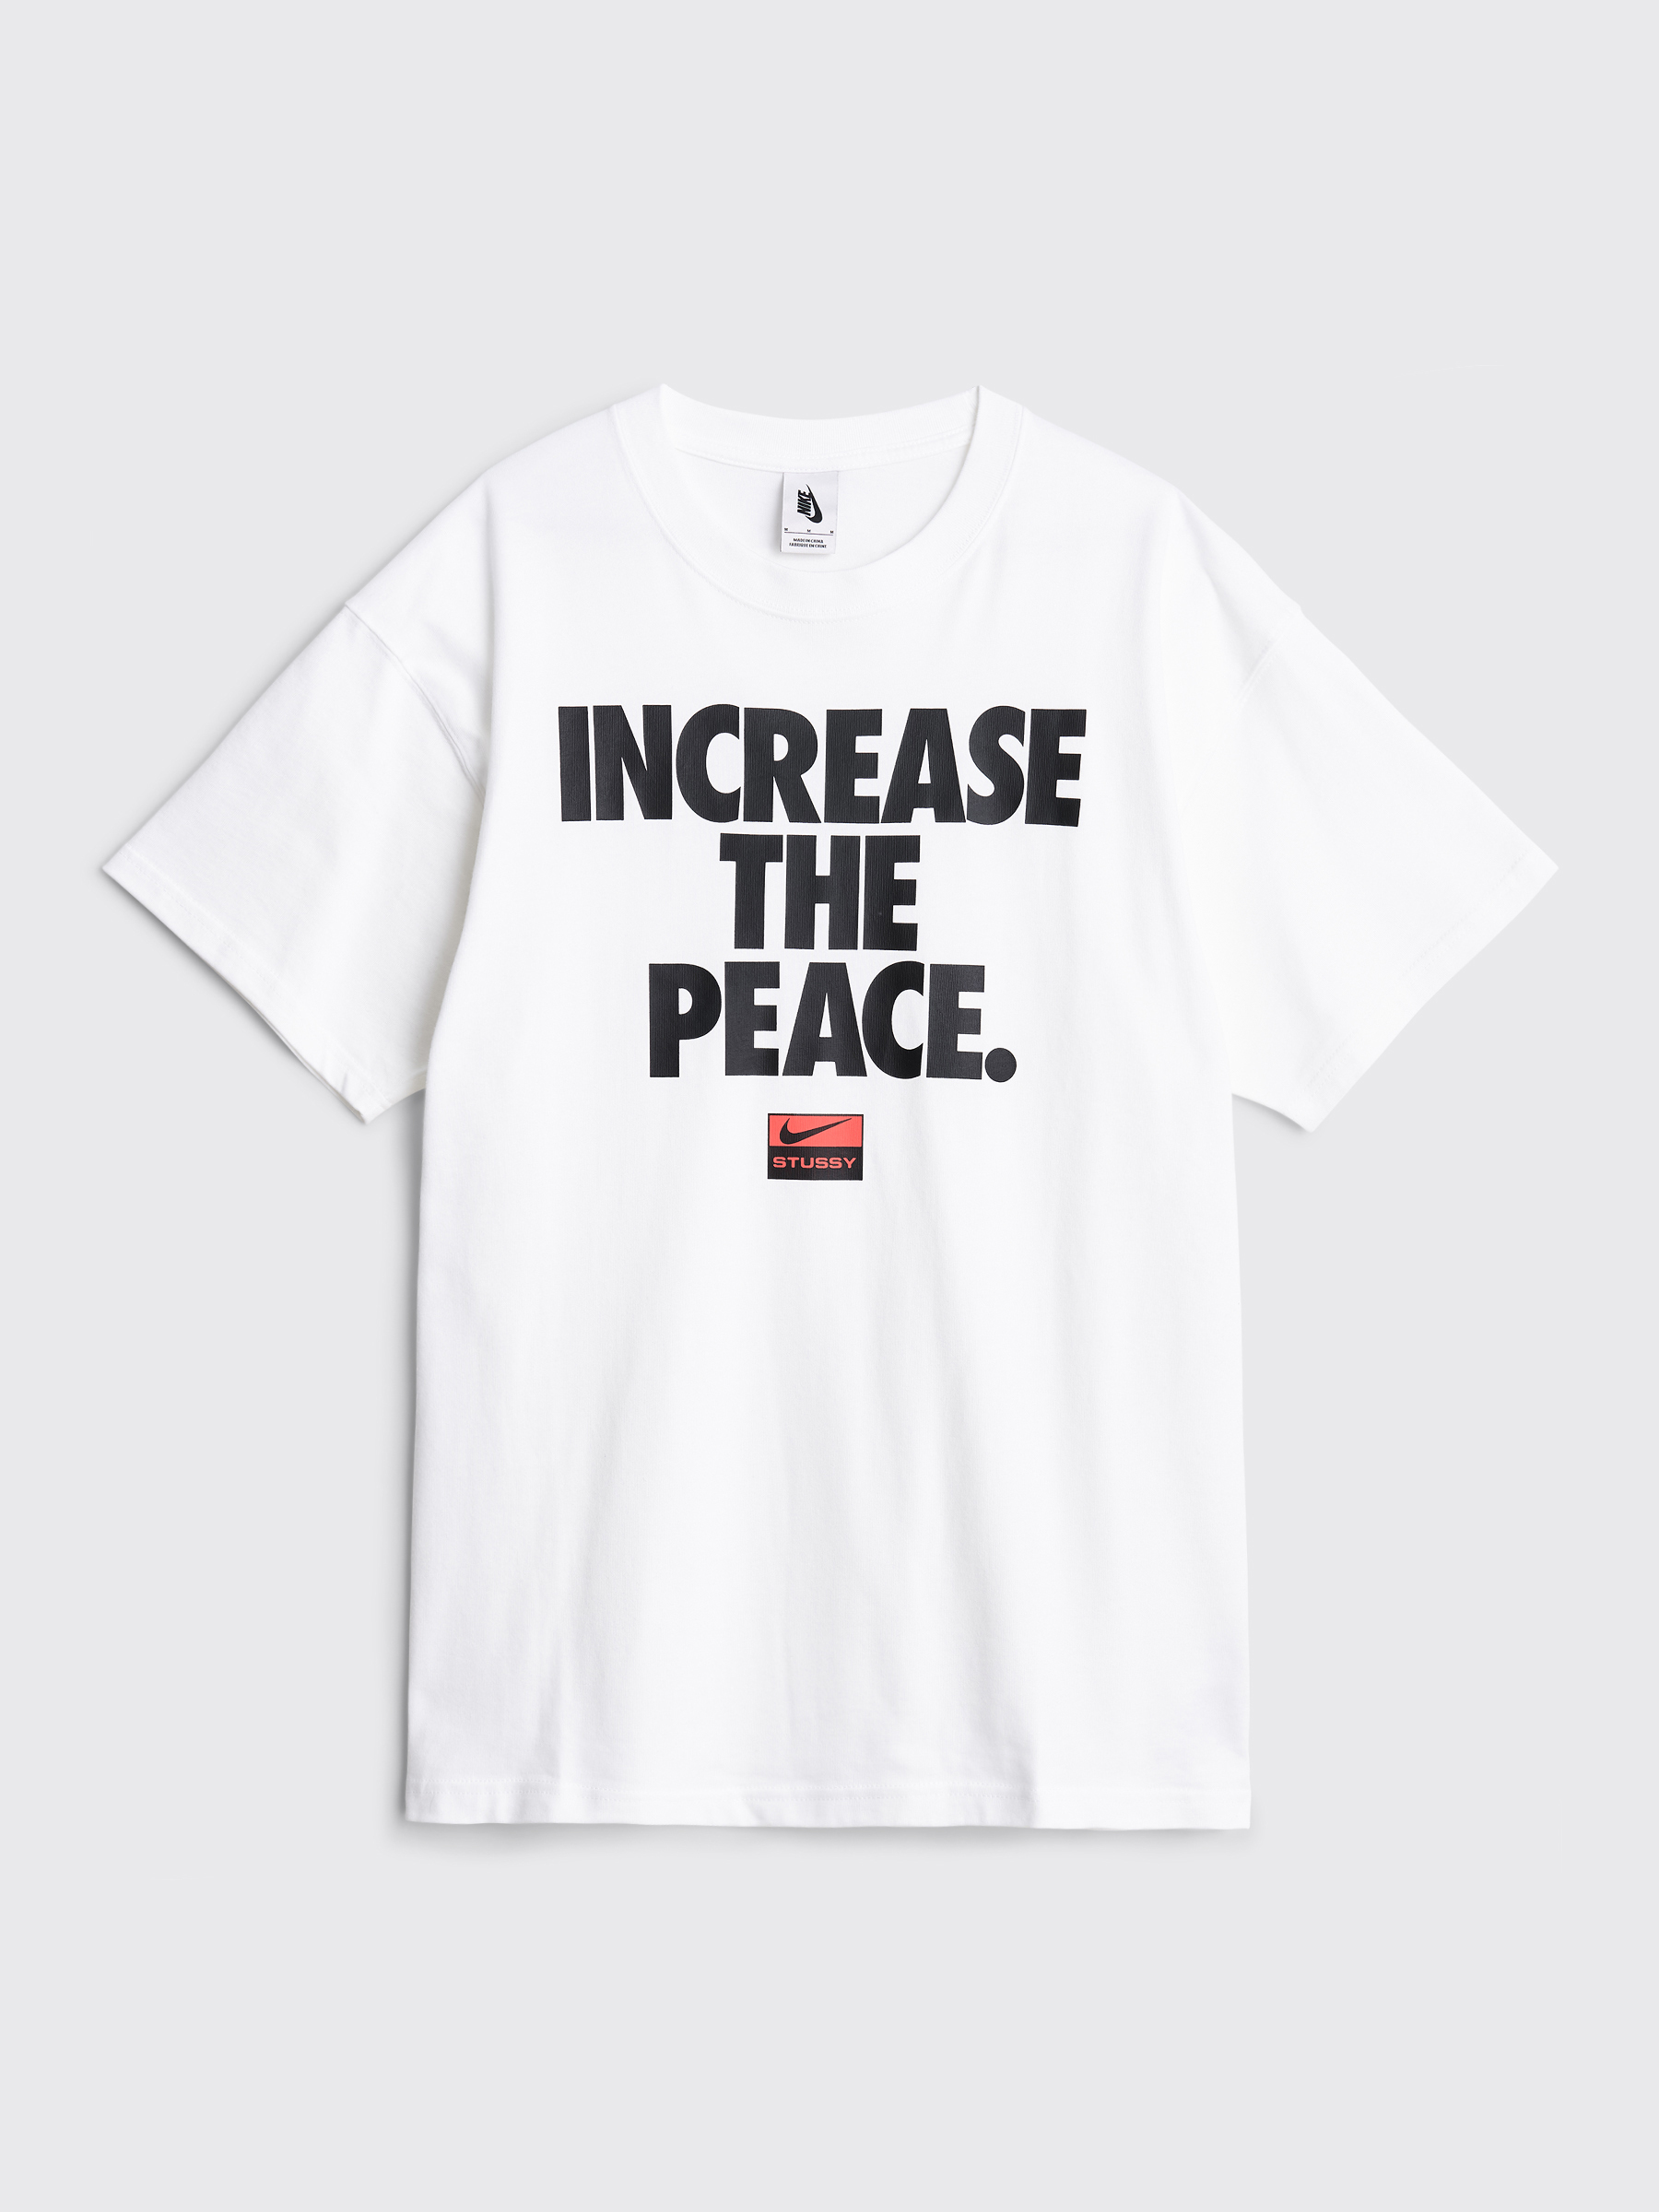 nike peace t shirt